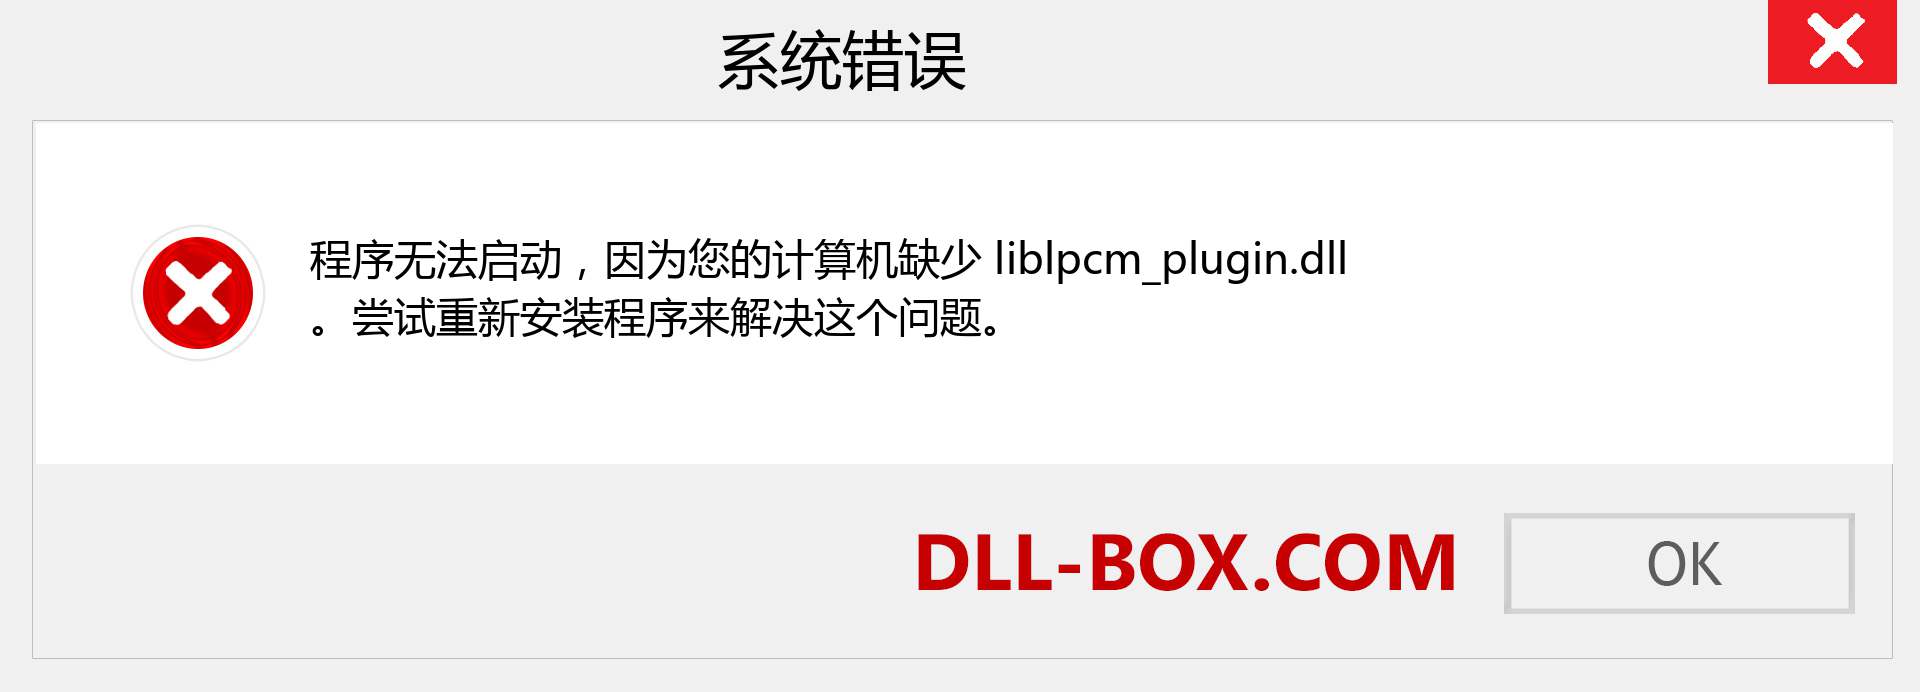 liblpcm_plugin.dll 文件丢失？。 适用于 Windows 7、8、10 的下载 - 修复 Windows、照片、图像上的 liblpcm_plugin dll 丢失错误